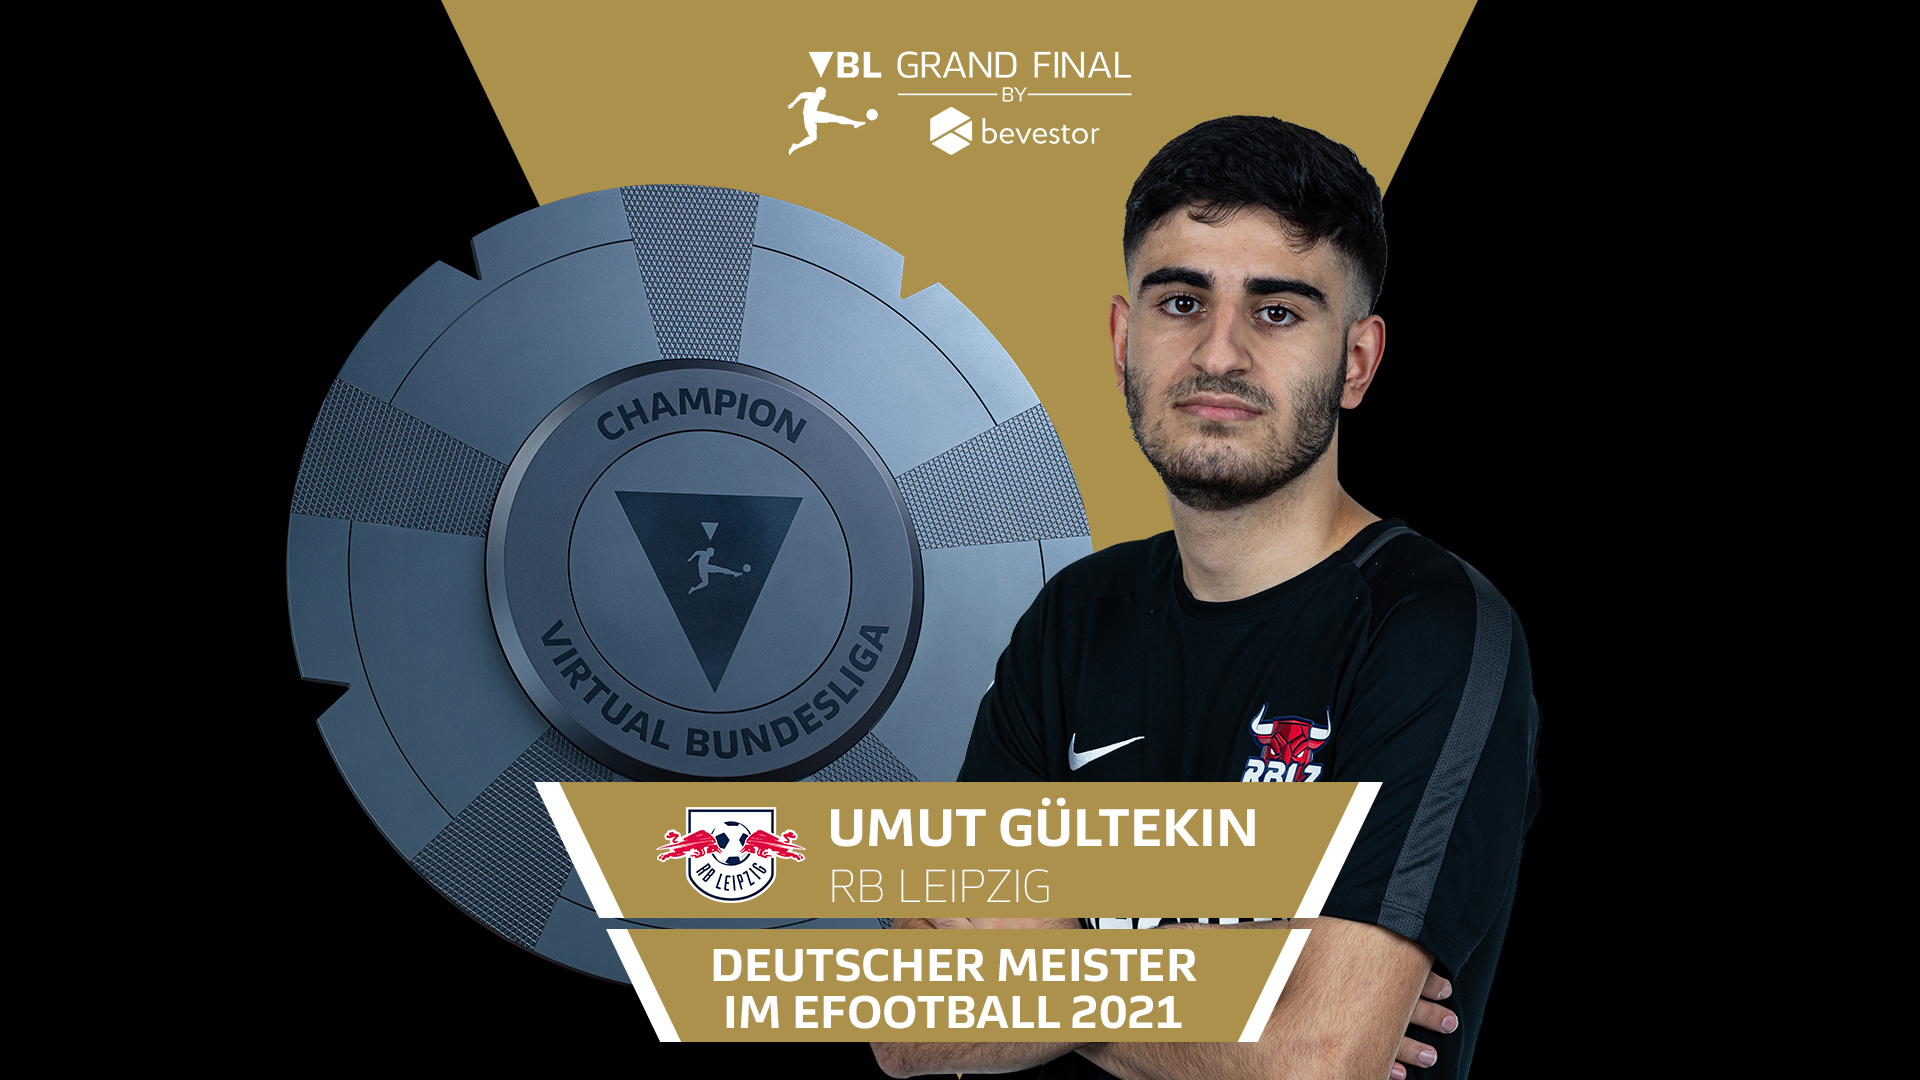 Umut Gültekin – FIFA eSport Weltmeister vom RB Leipzig